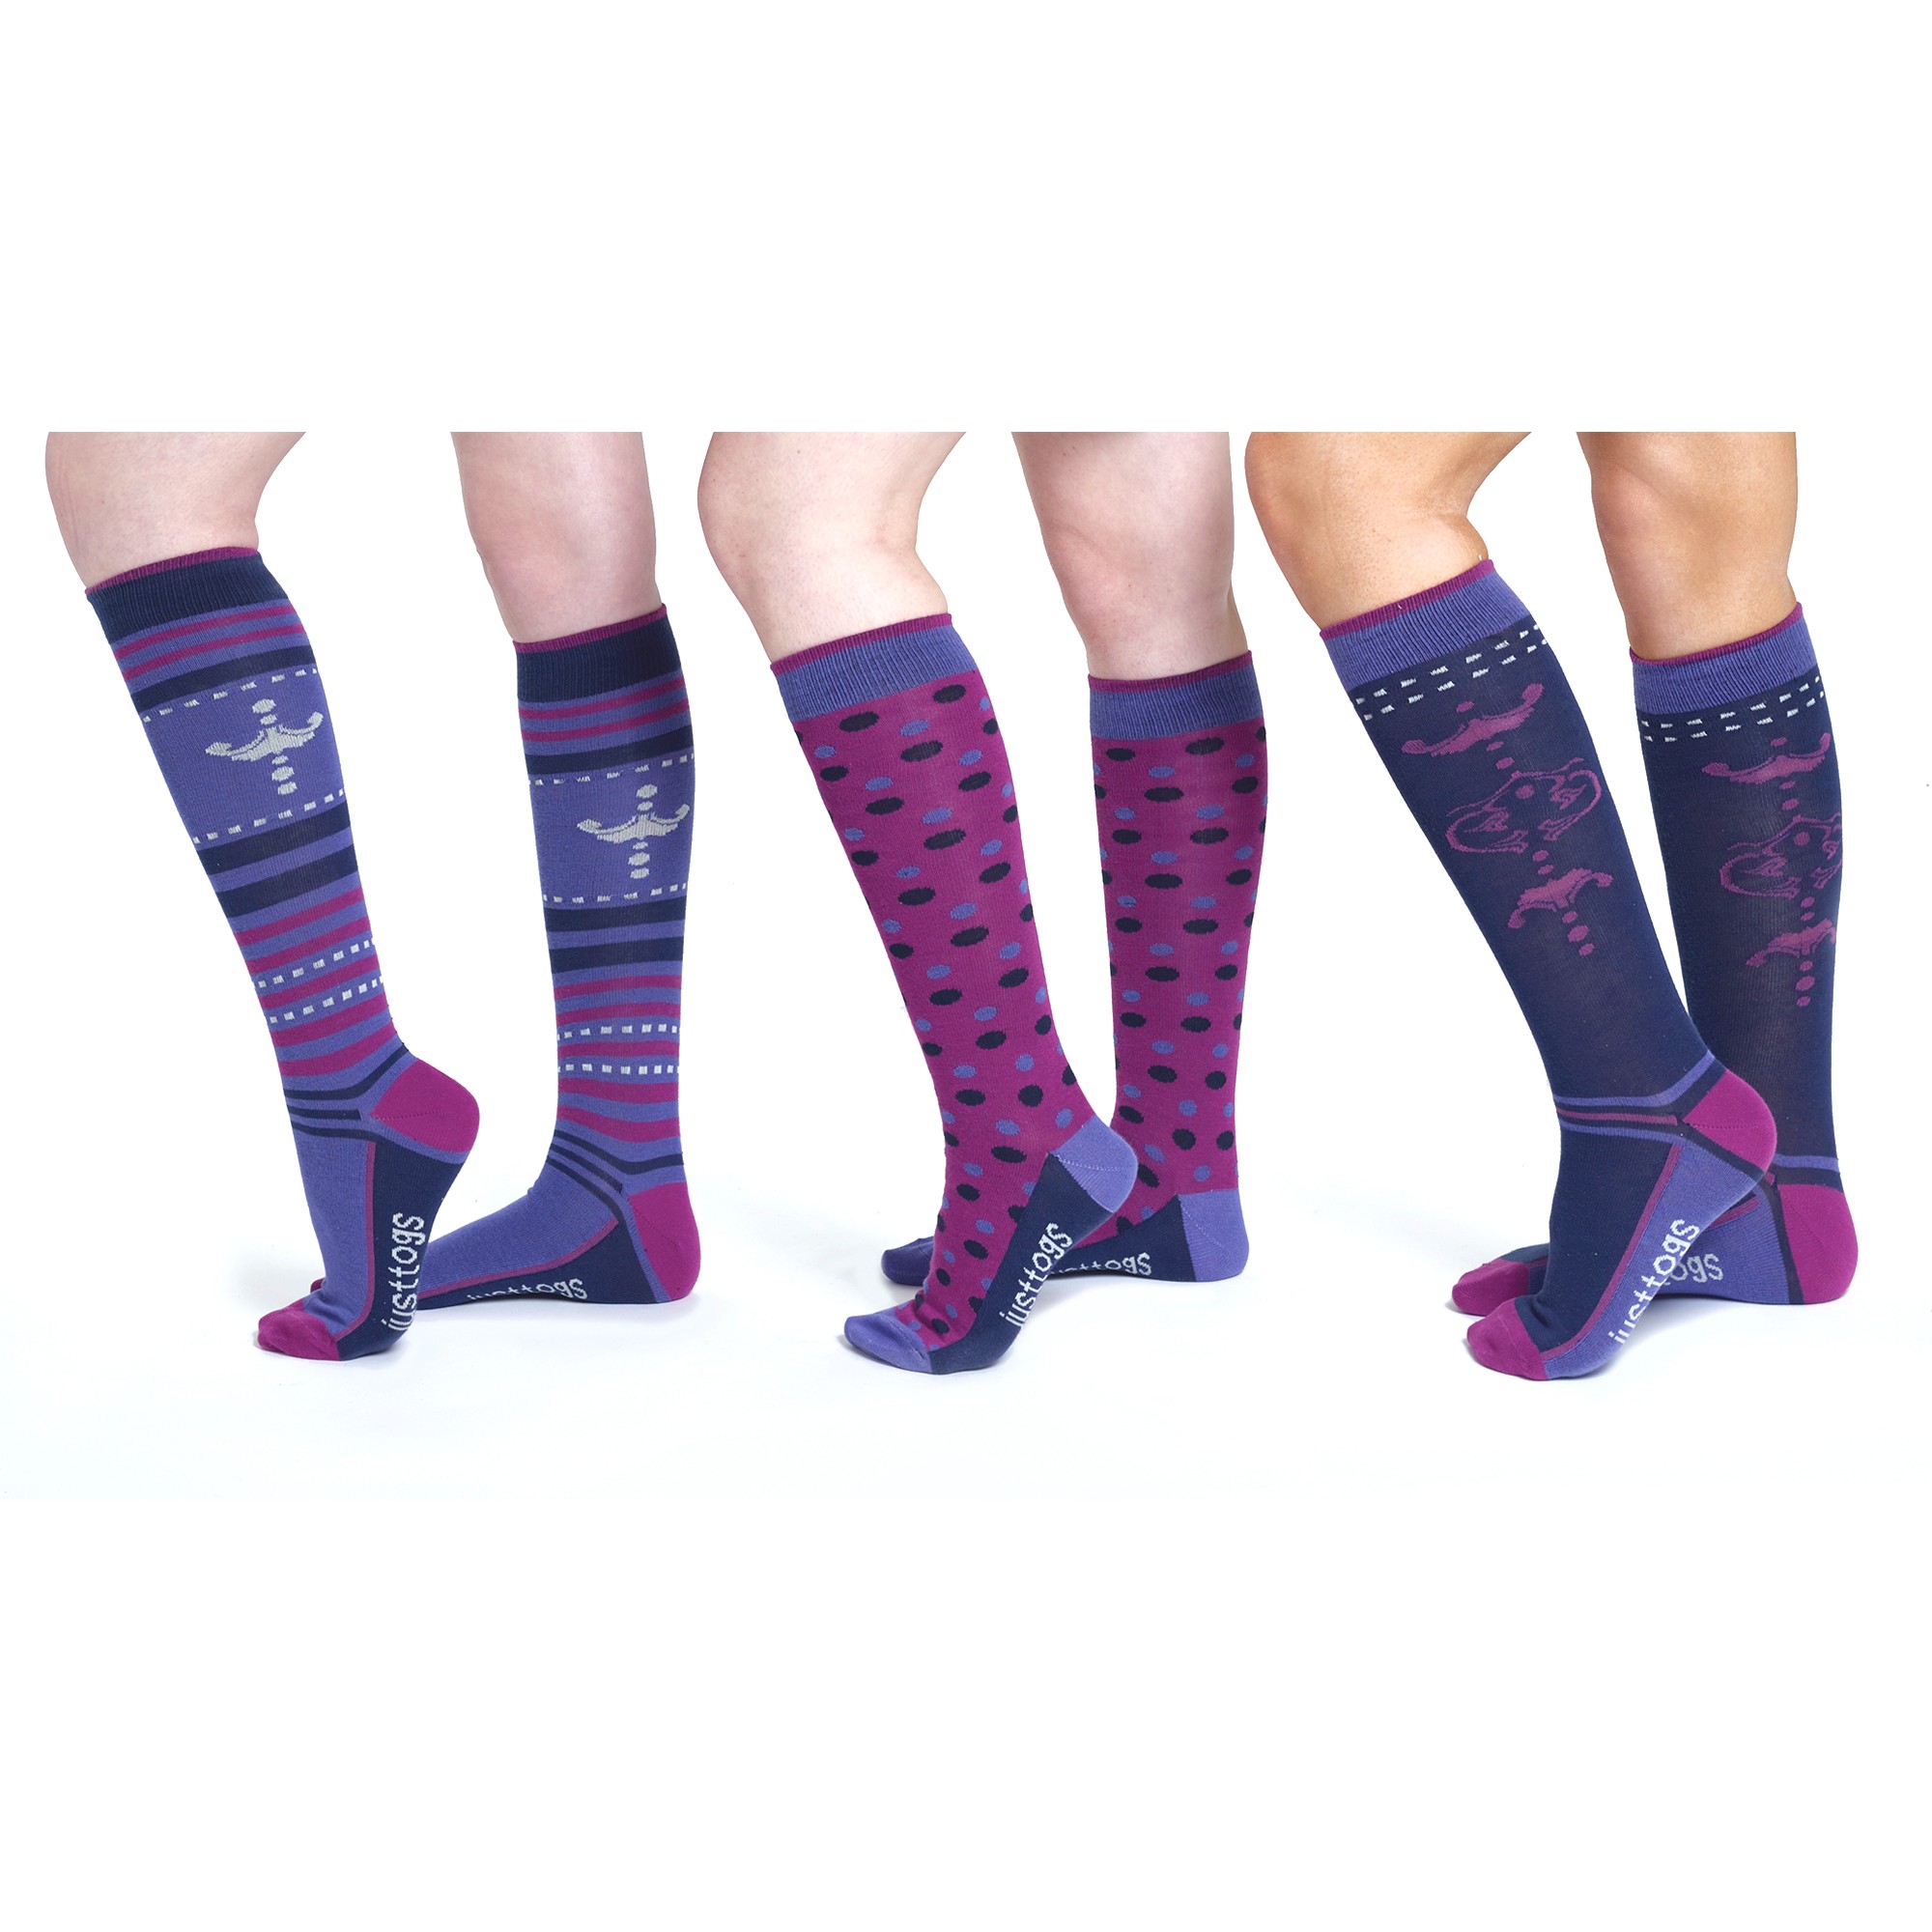 Just Togs Veneto Spring 2016 Socks - 3 Pack